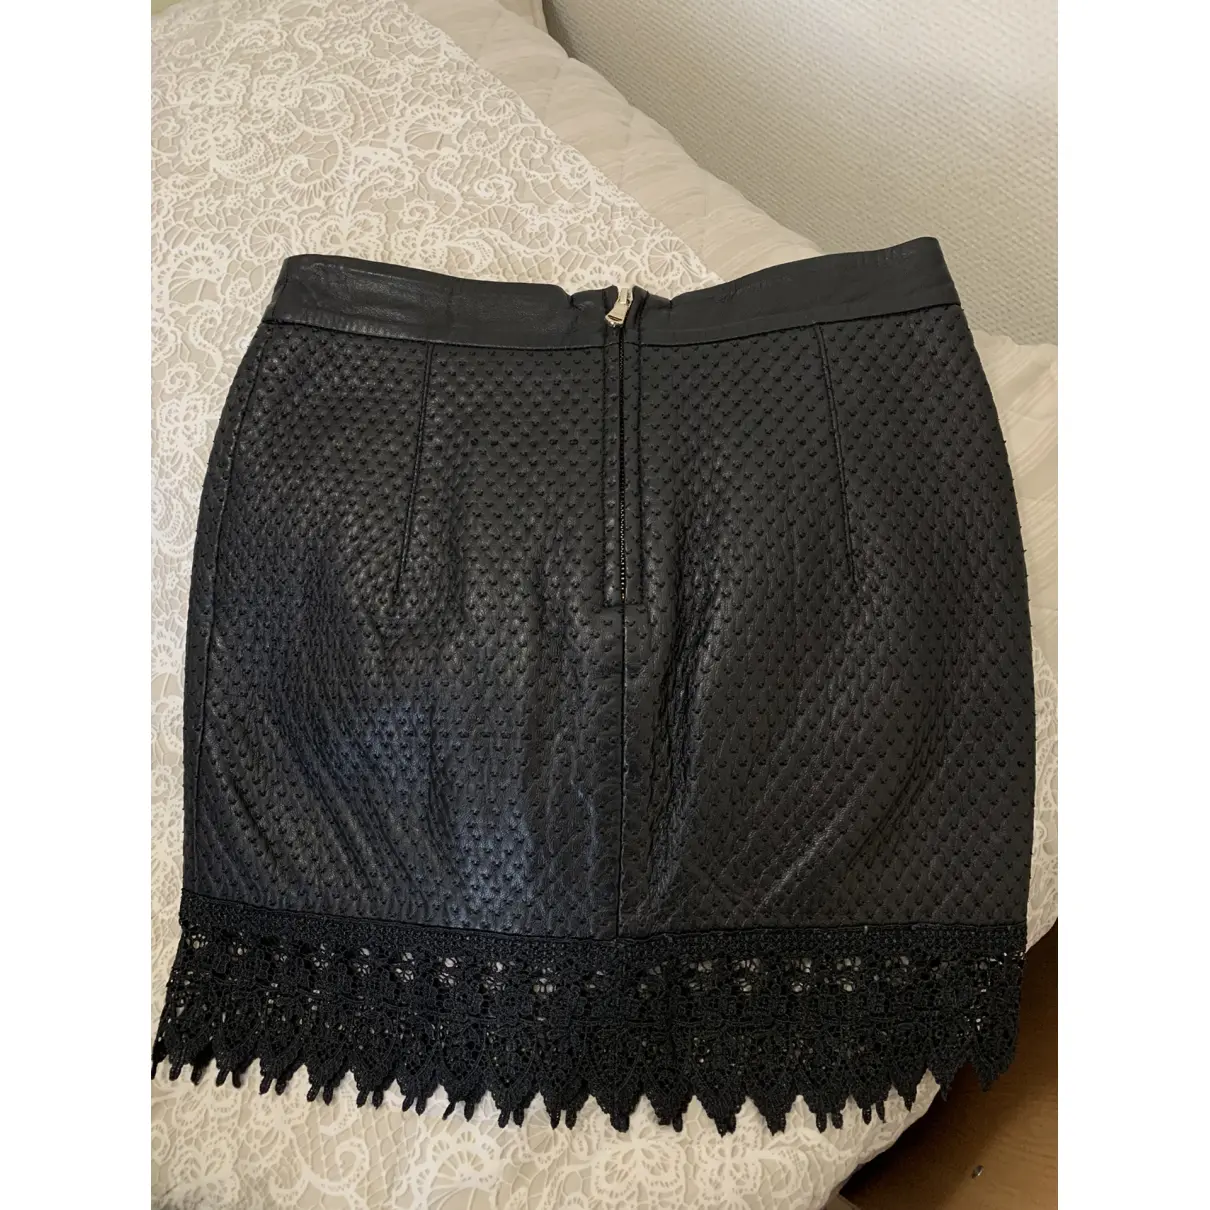 Buy Patrizia Pepe Leather mini skirt online